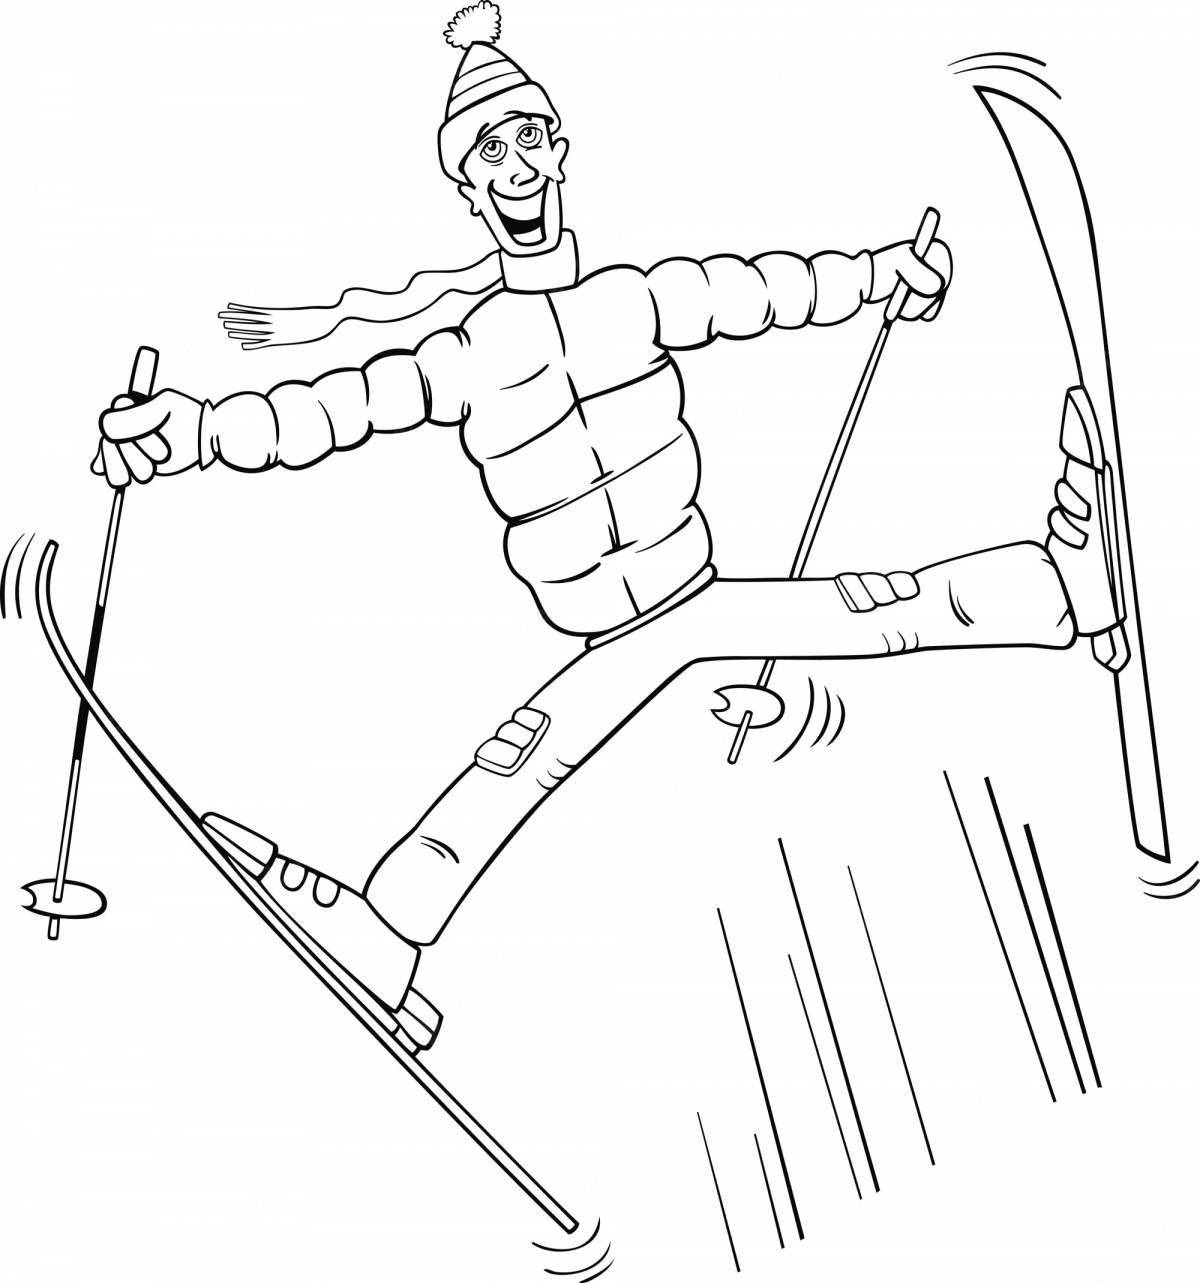 Inspirational ski race coloring page